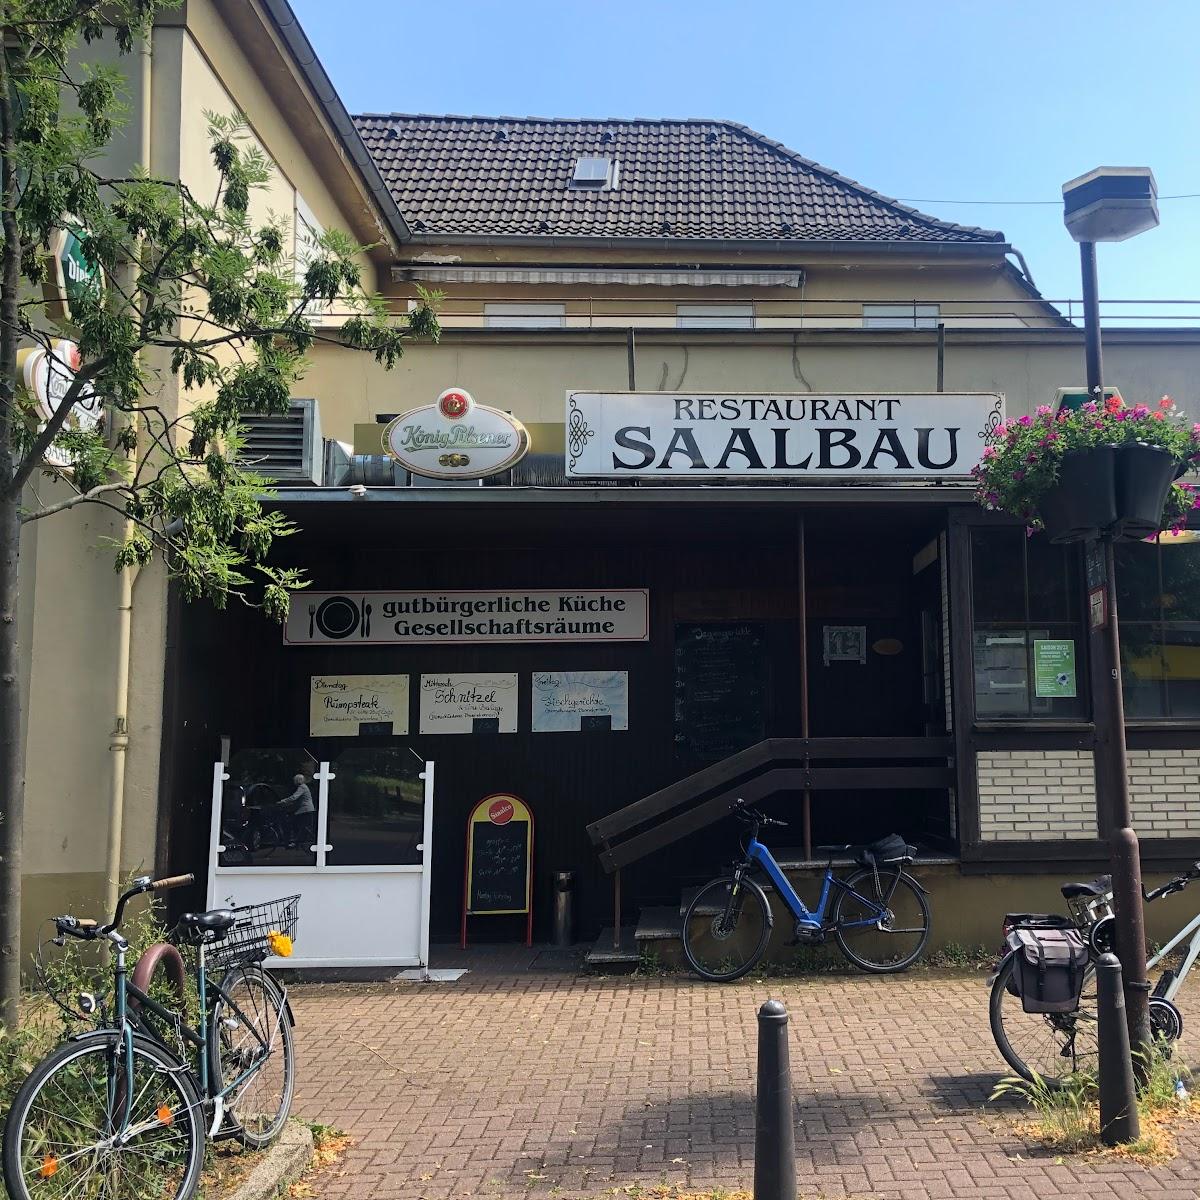 Restaurant "Restaurant Saalbau" in Duisburg